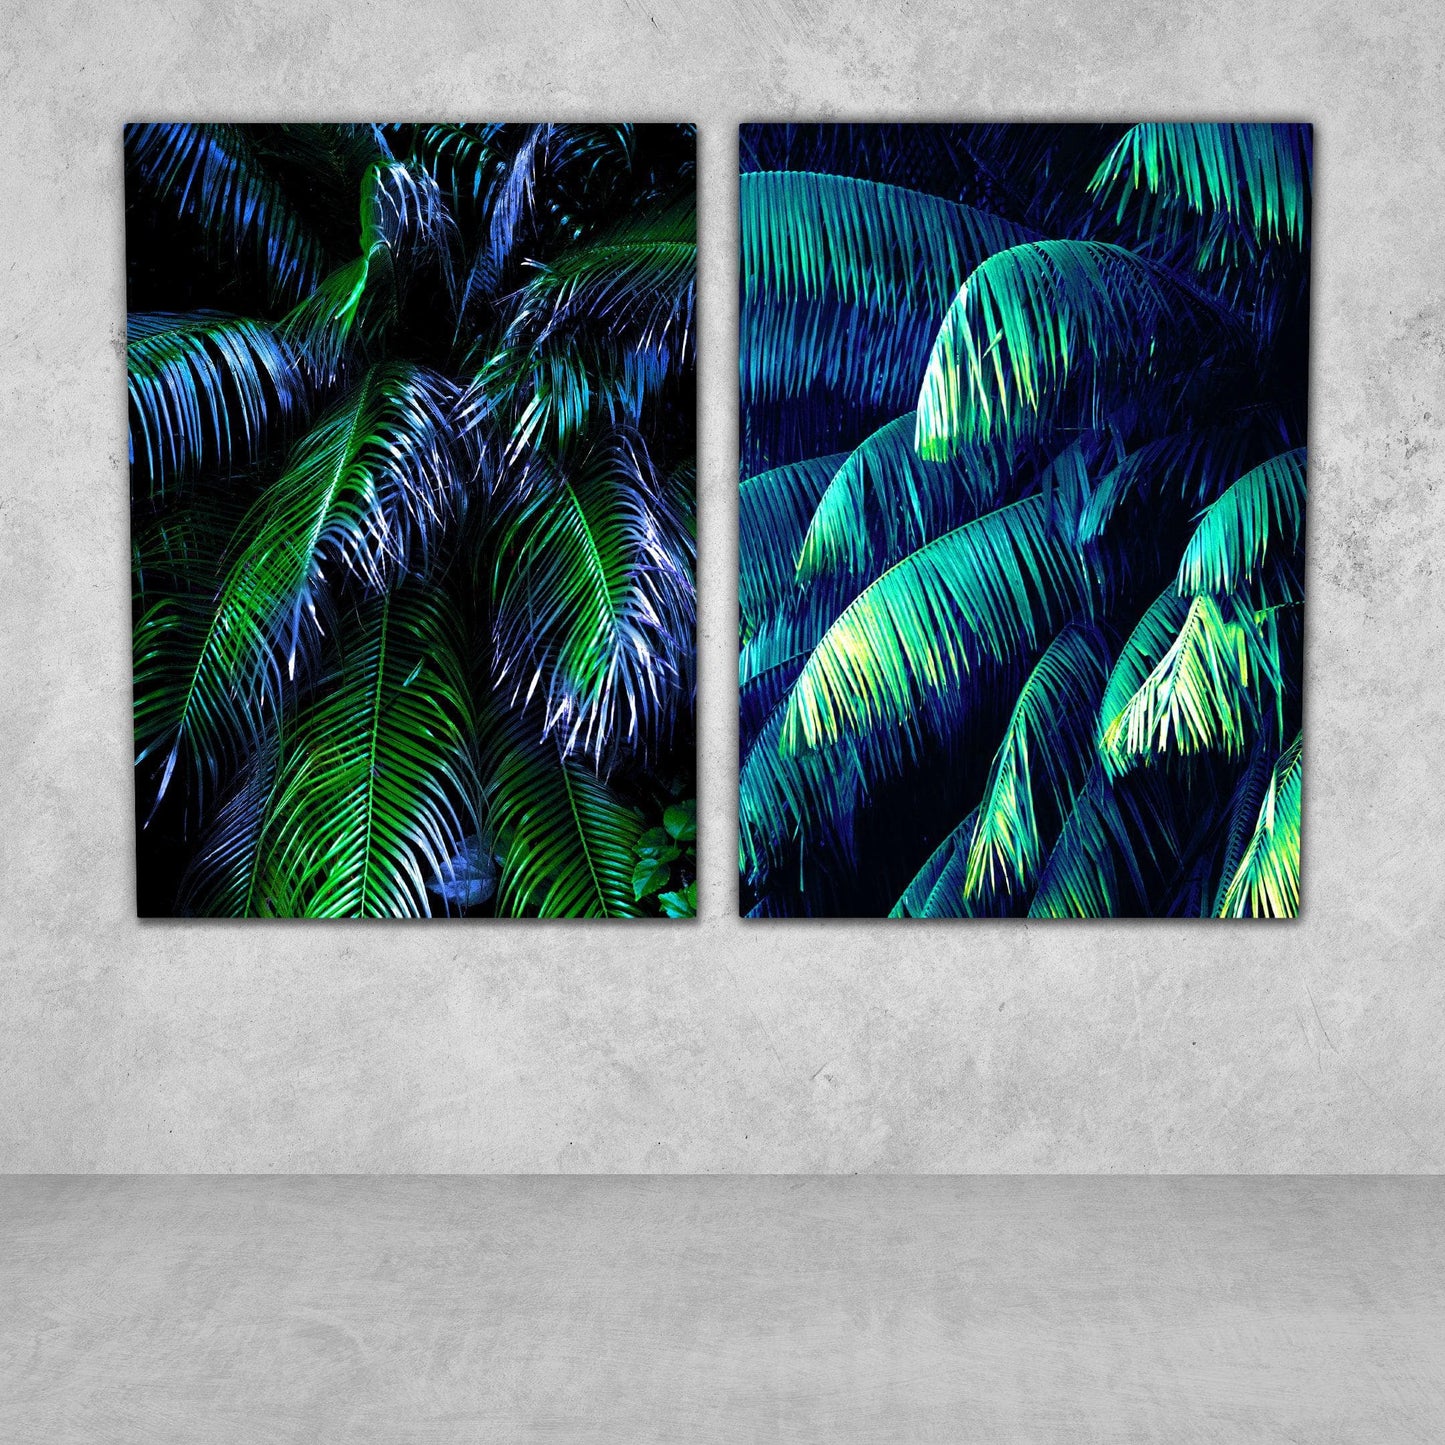 Tropical Palm Tree Foliage Leaves Canvas #C117